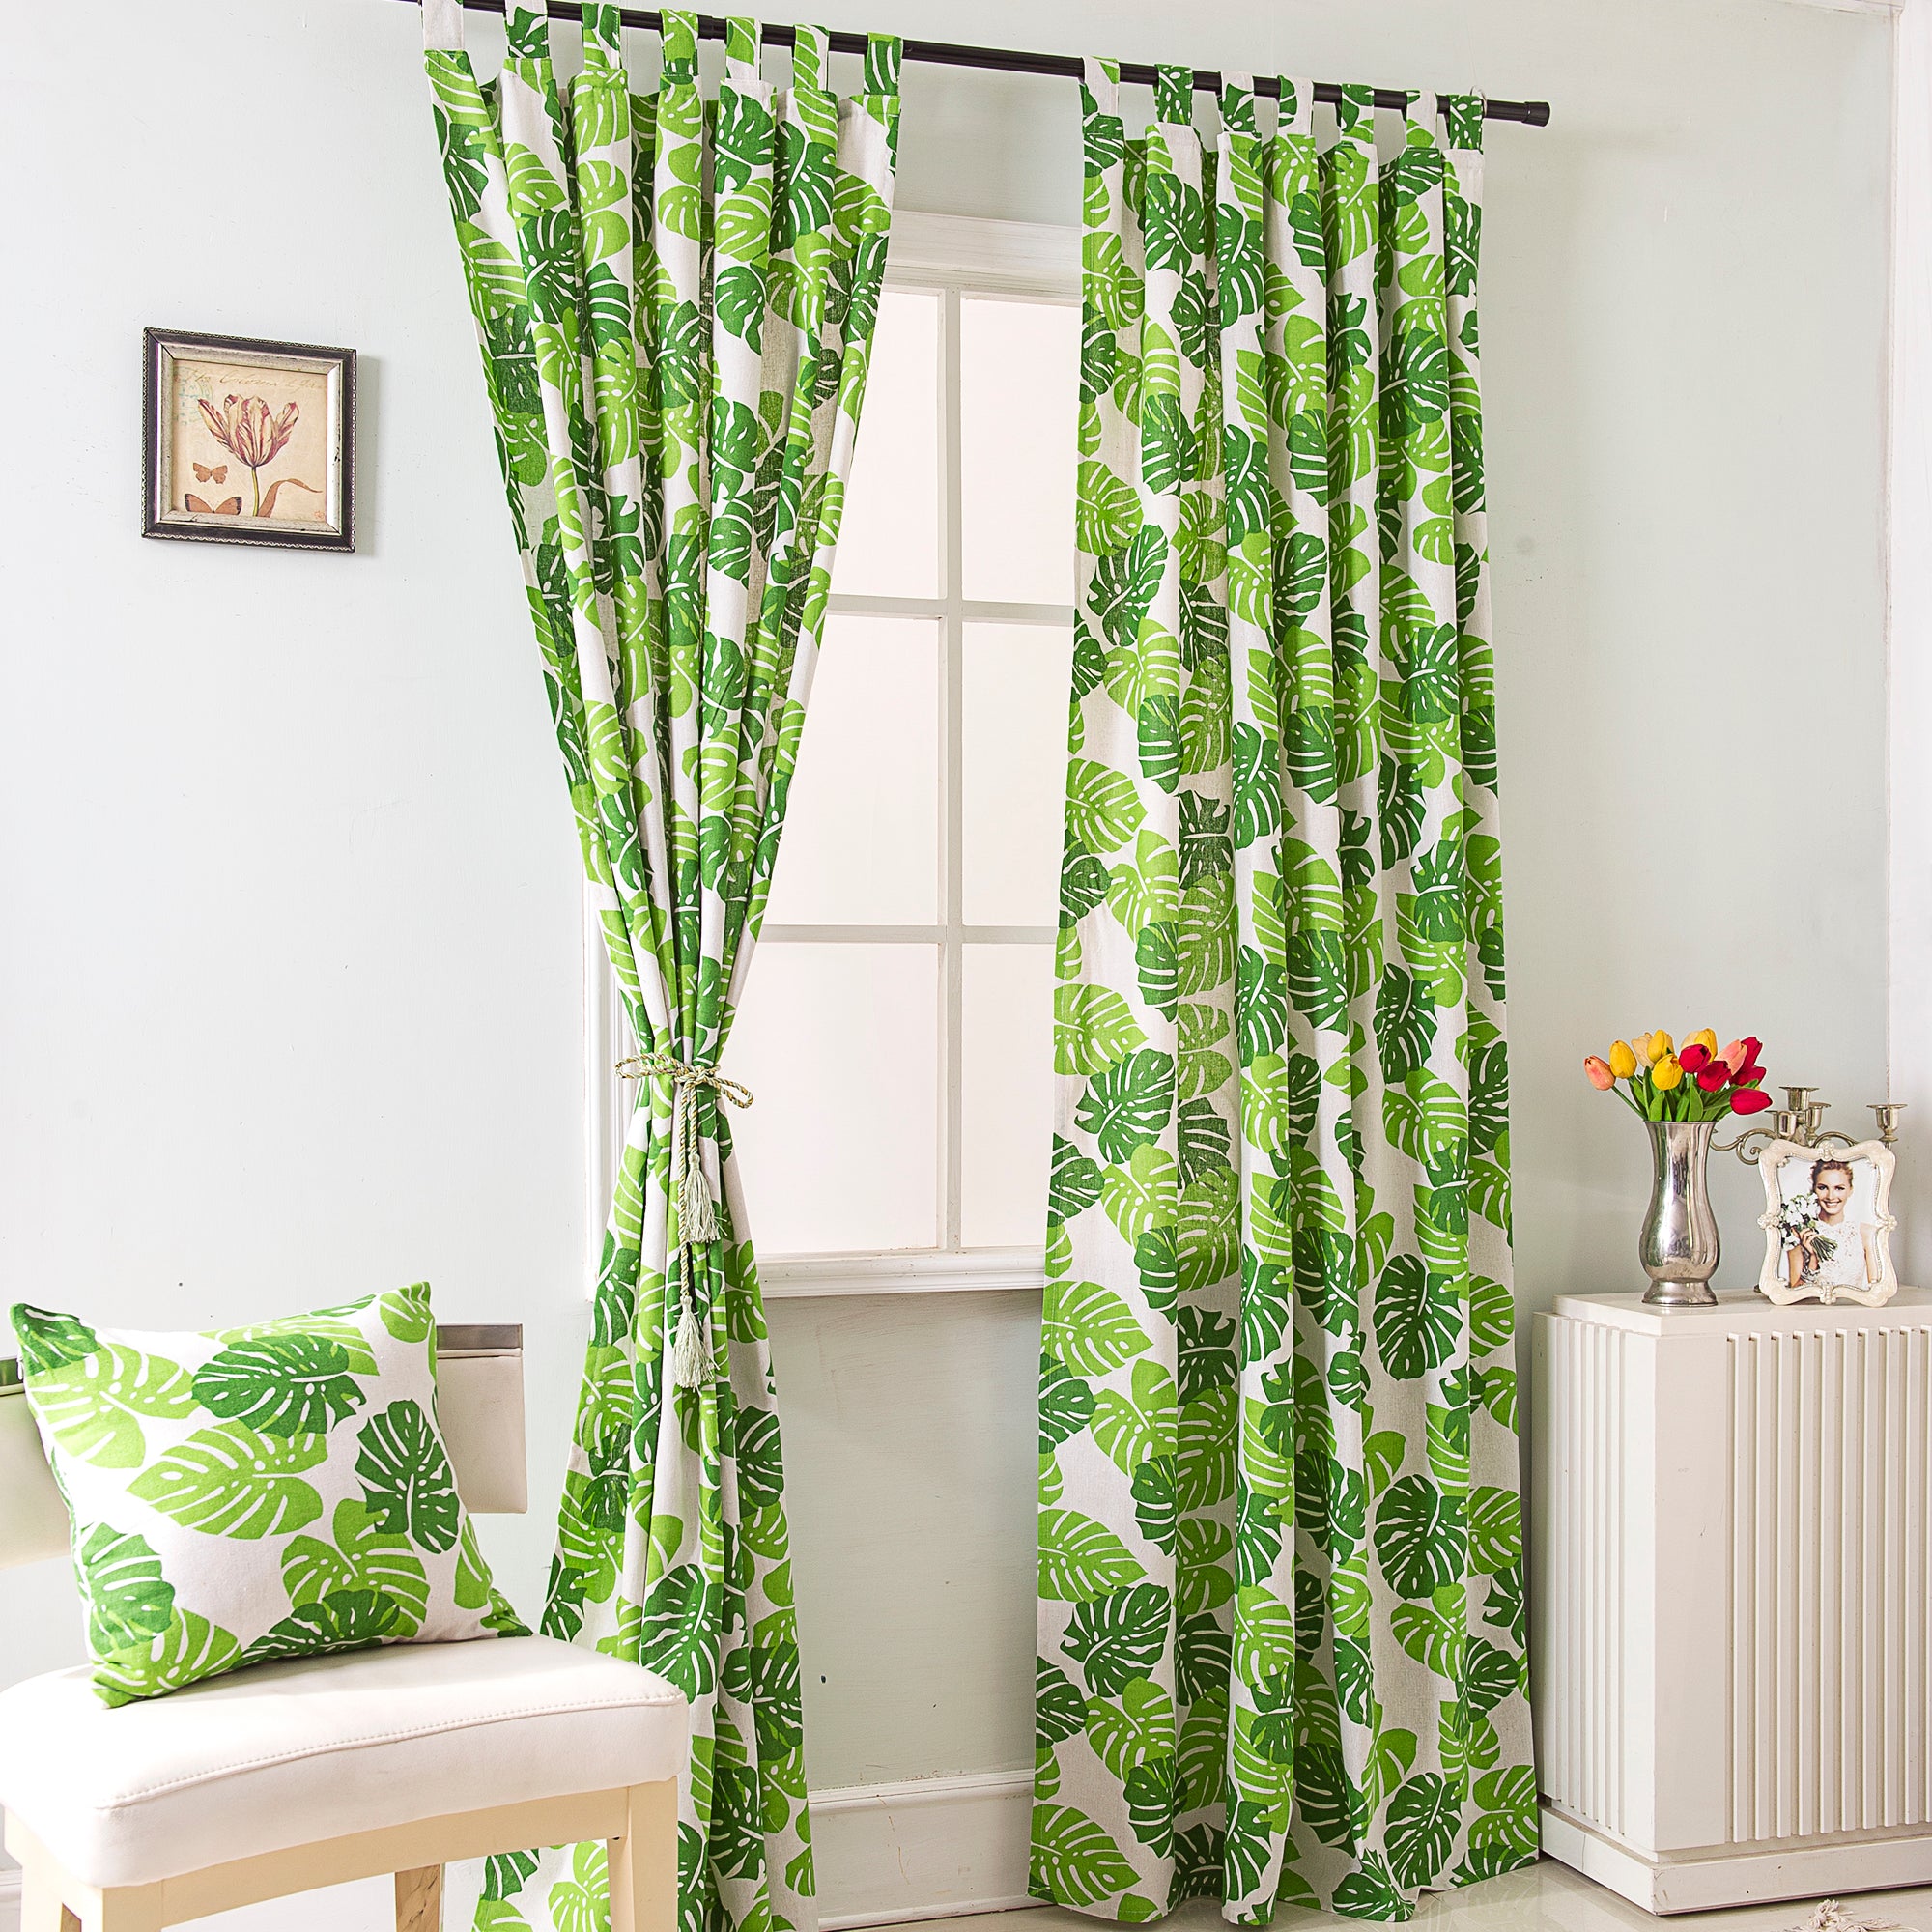 2PCS Green Leaf Curtains for Living Room- Monstera Plant Print Window Treatment Panels Blackout for Kids Bedroom Nursery Decor